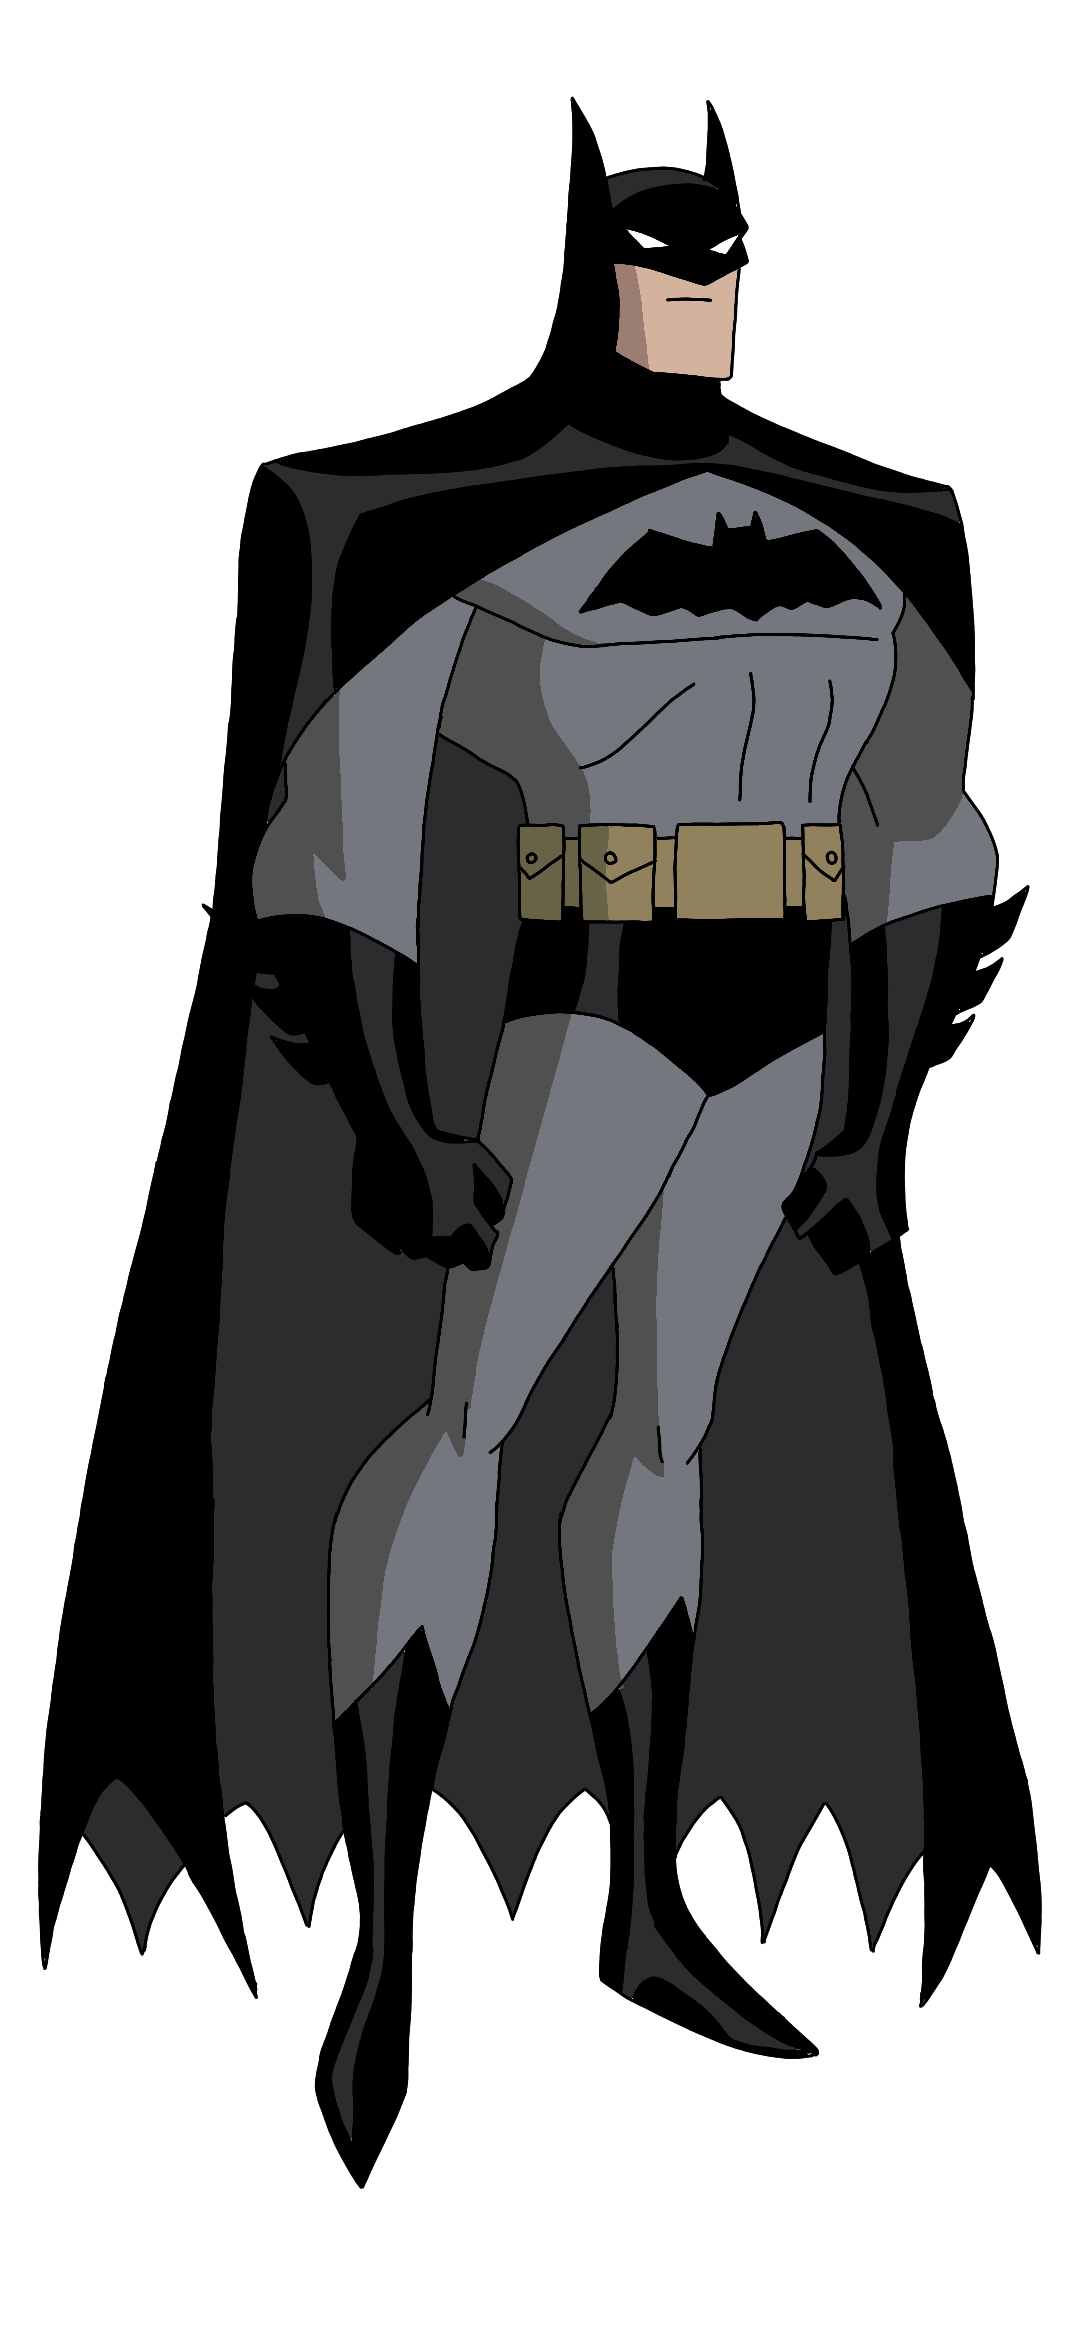 TNBA Batman (JLU Style) by zakareer on DeviantArt